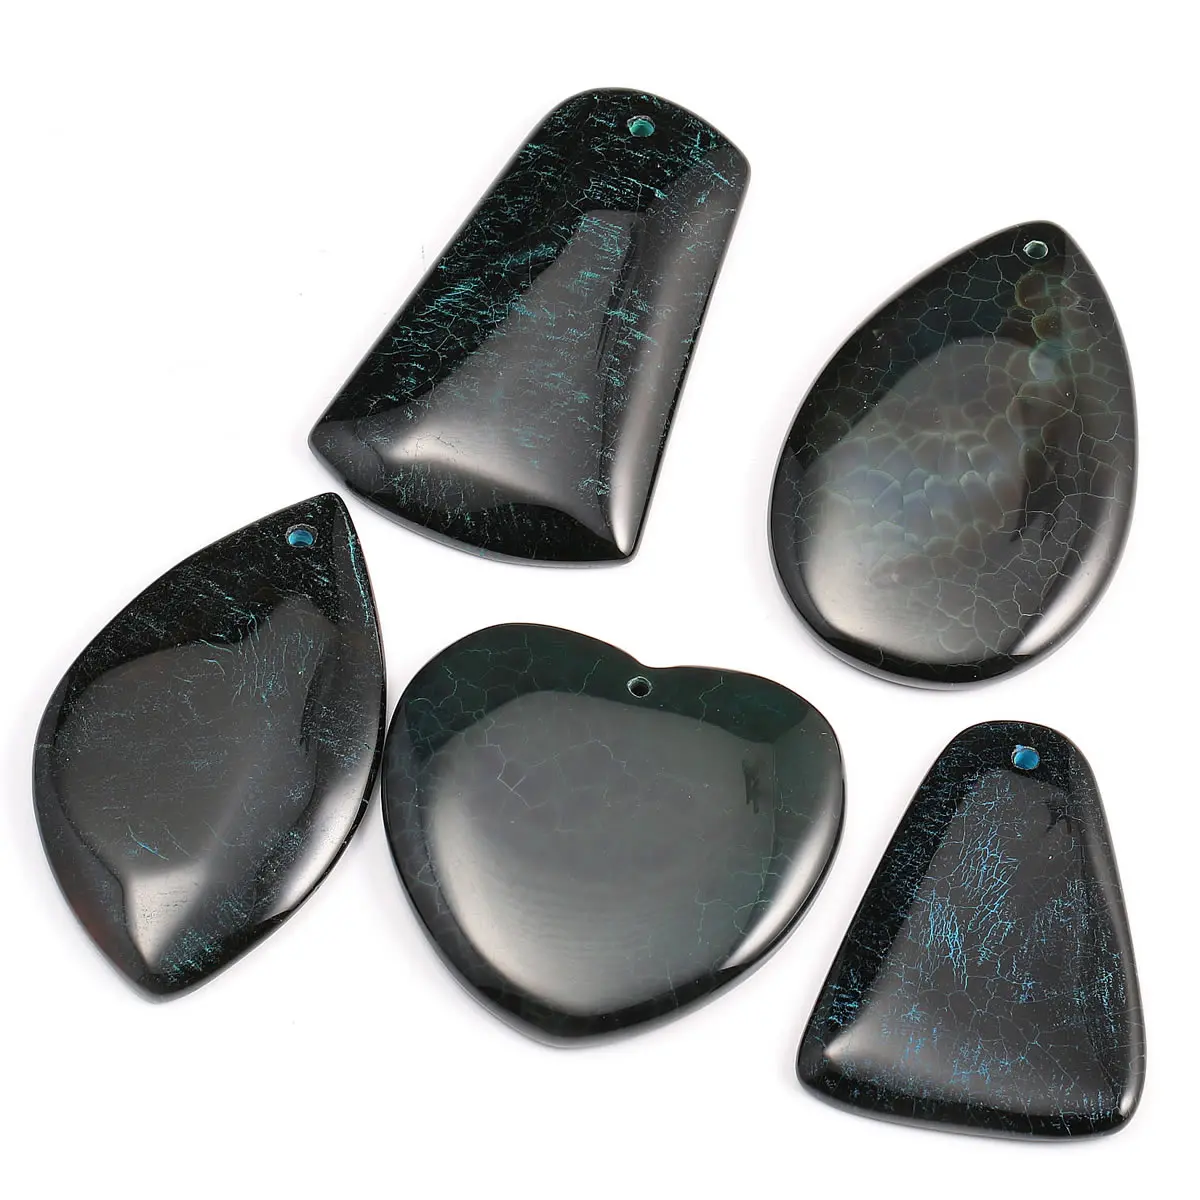 

5pcs / Lot Black Dragon Pattern Agates Pendant Reiki Healing Natural Stone Meditation Amulet DIY Jewelry Natural Stone Charms